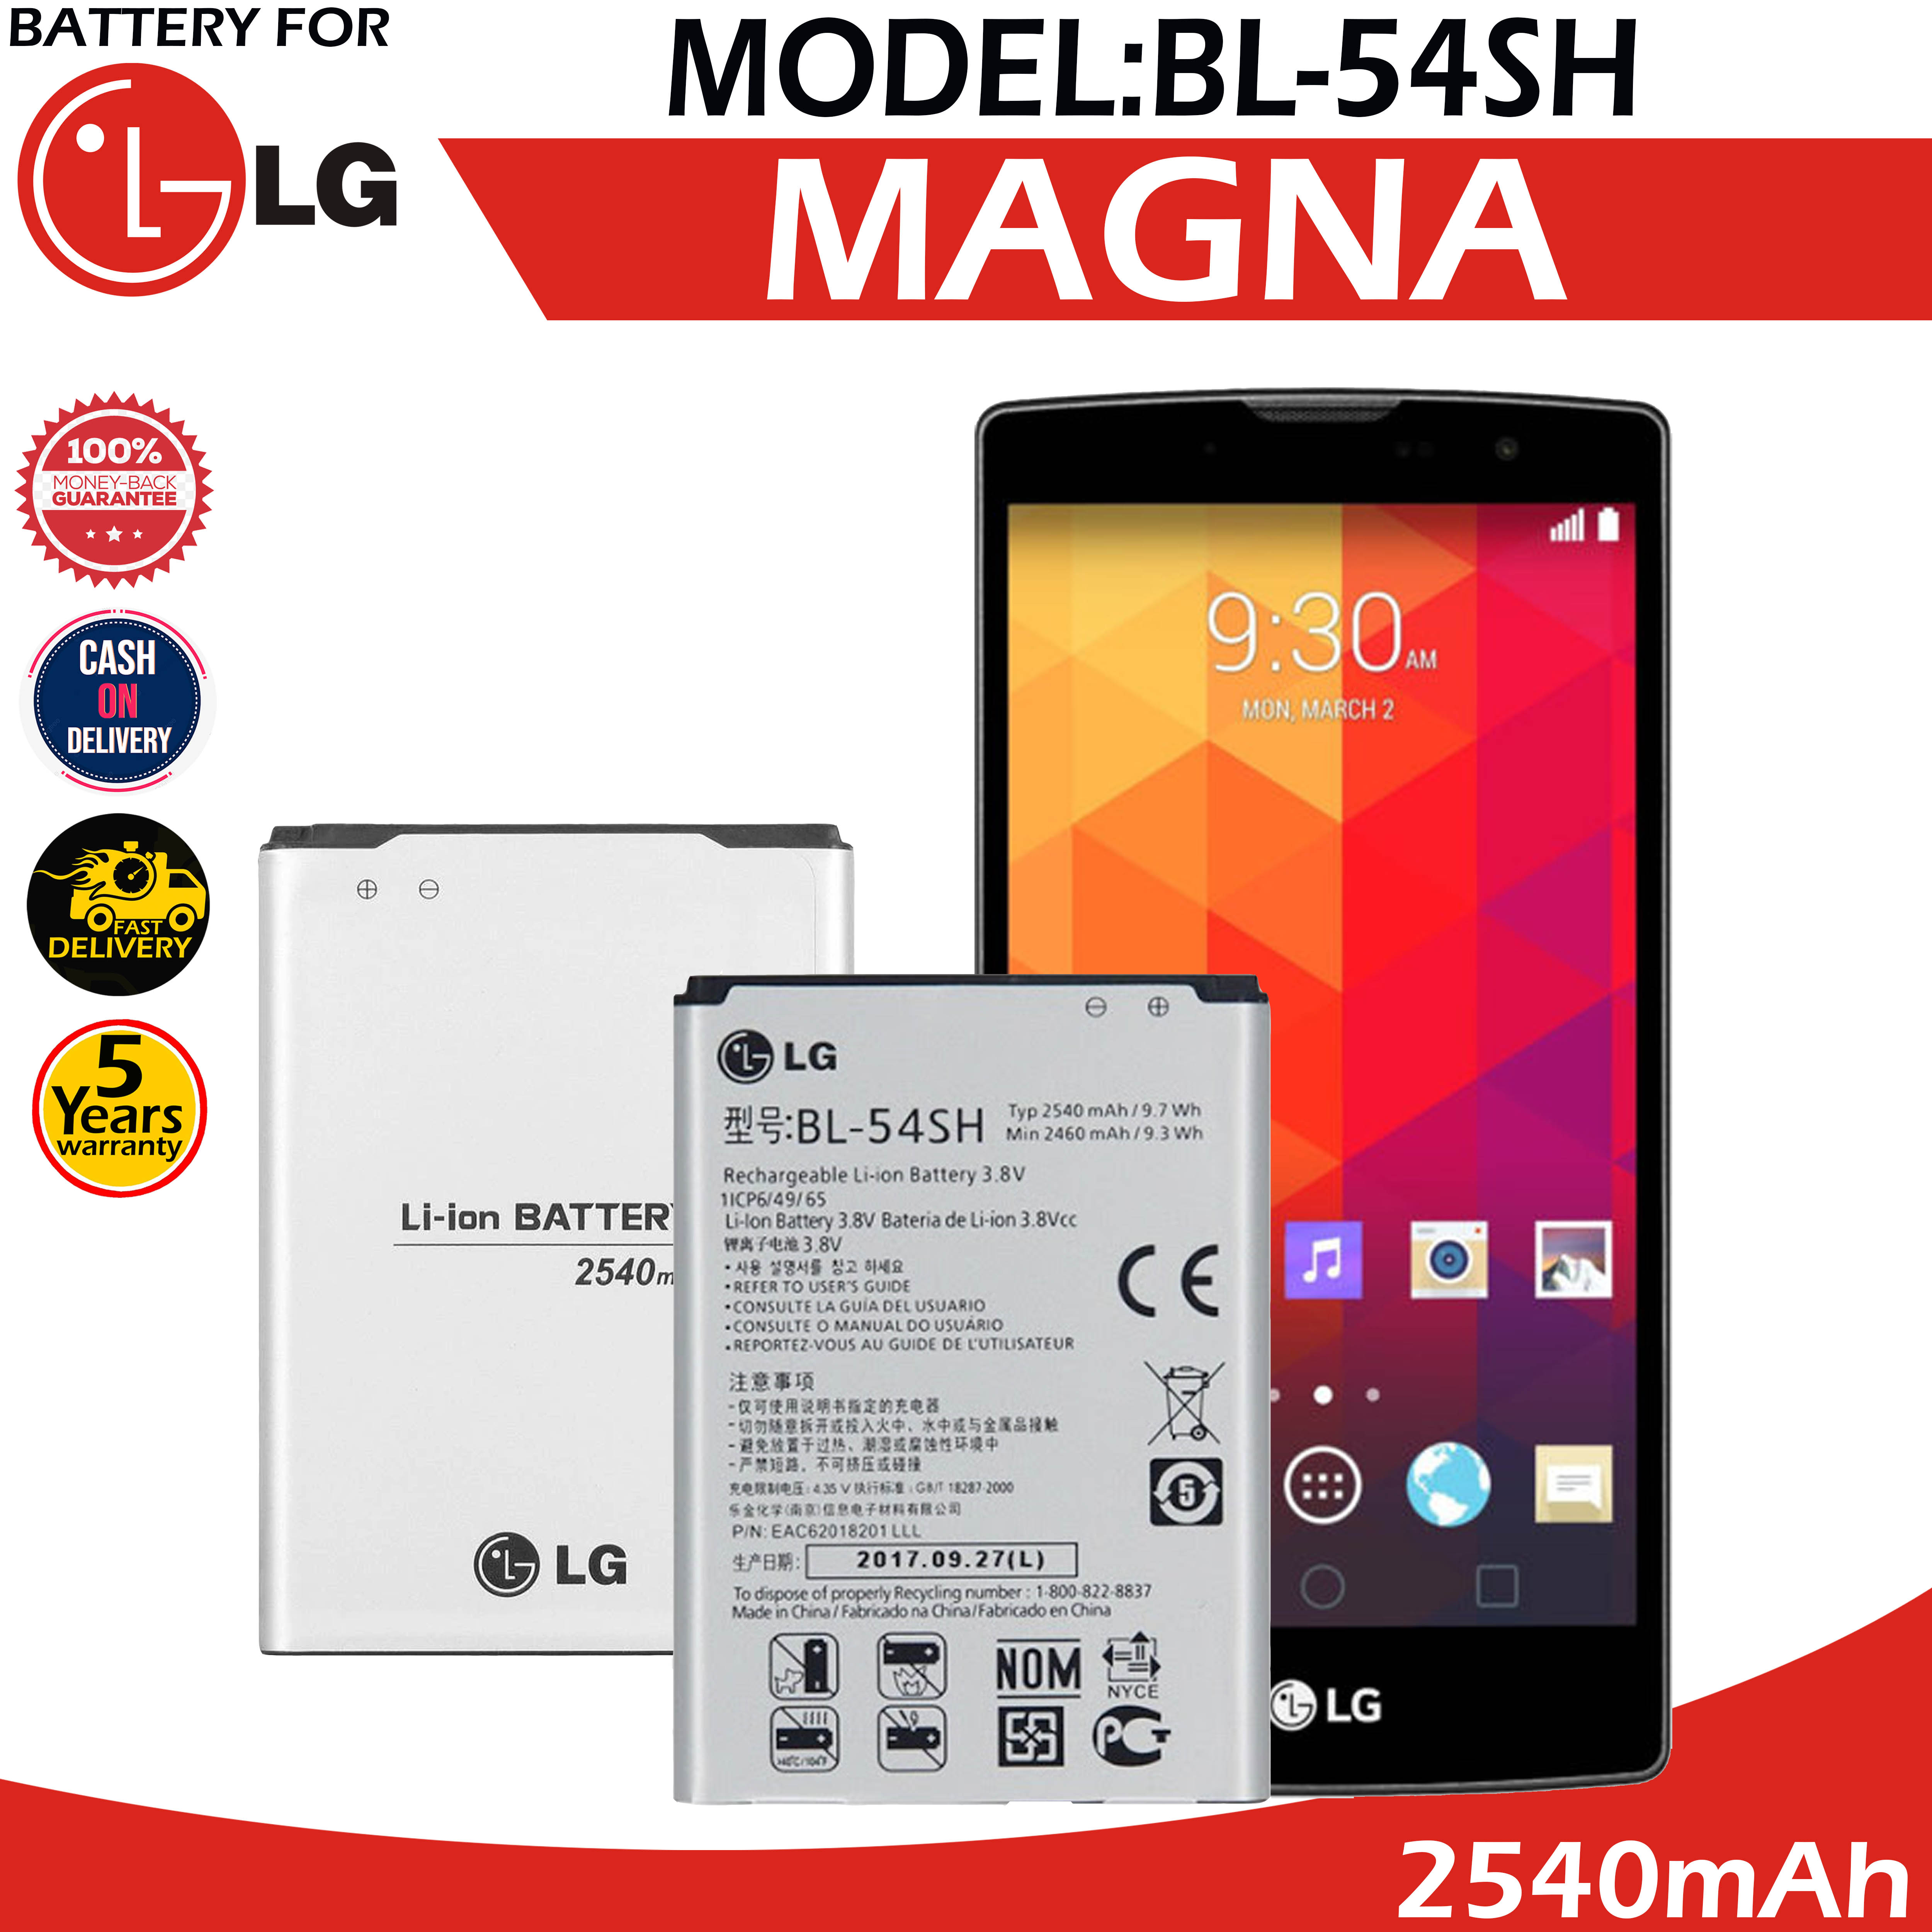 LG MAGNA Battery Model BL-54SH F260 L90 D415 US780 LG870 US870 LS75  100%Original Equipment Manufacturer Everlasting user 2540mAh | Lazada PH